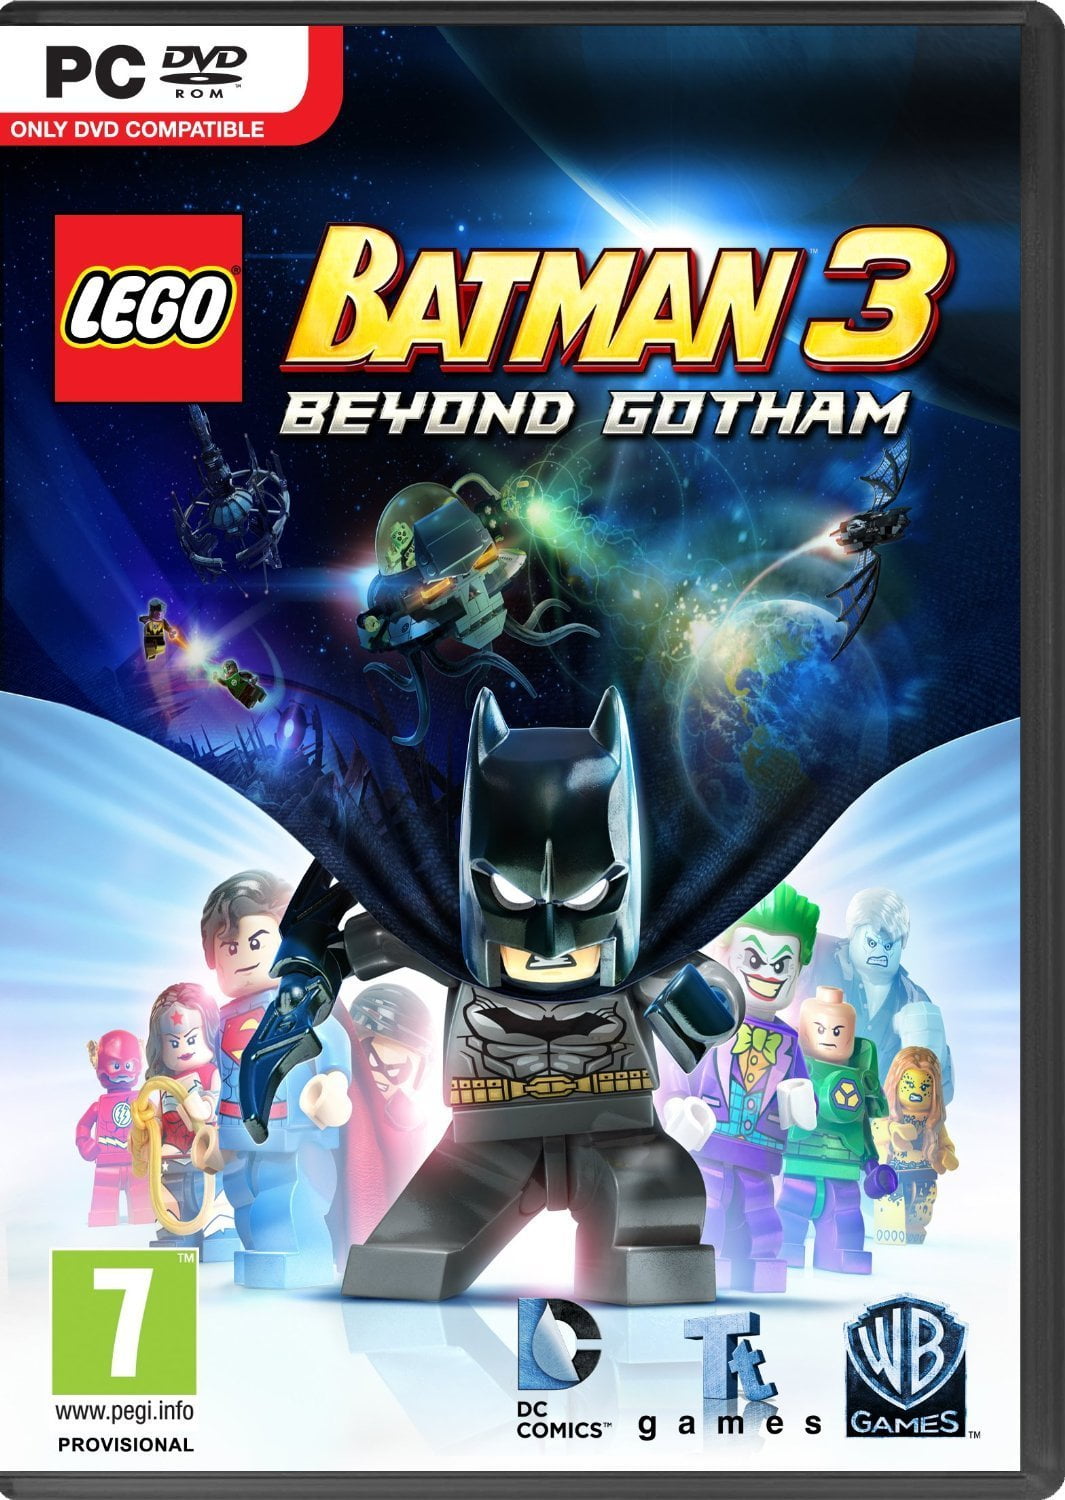 LEGO Batman 3 Beyond Gotham PC DVD-Rom - Heroes and Villains Unite to Save  Earth from Brainiac 